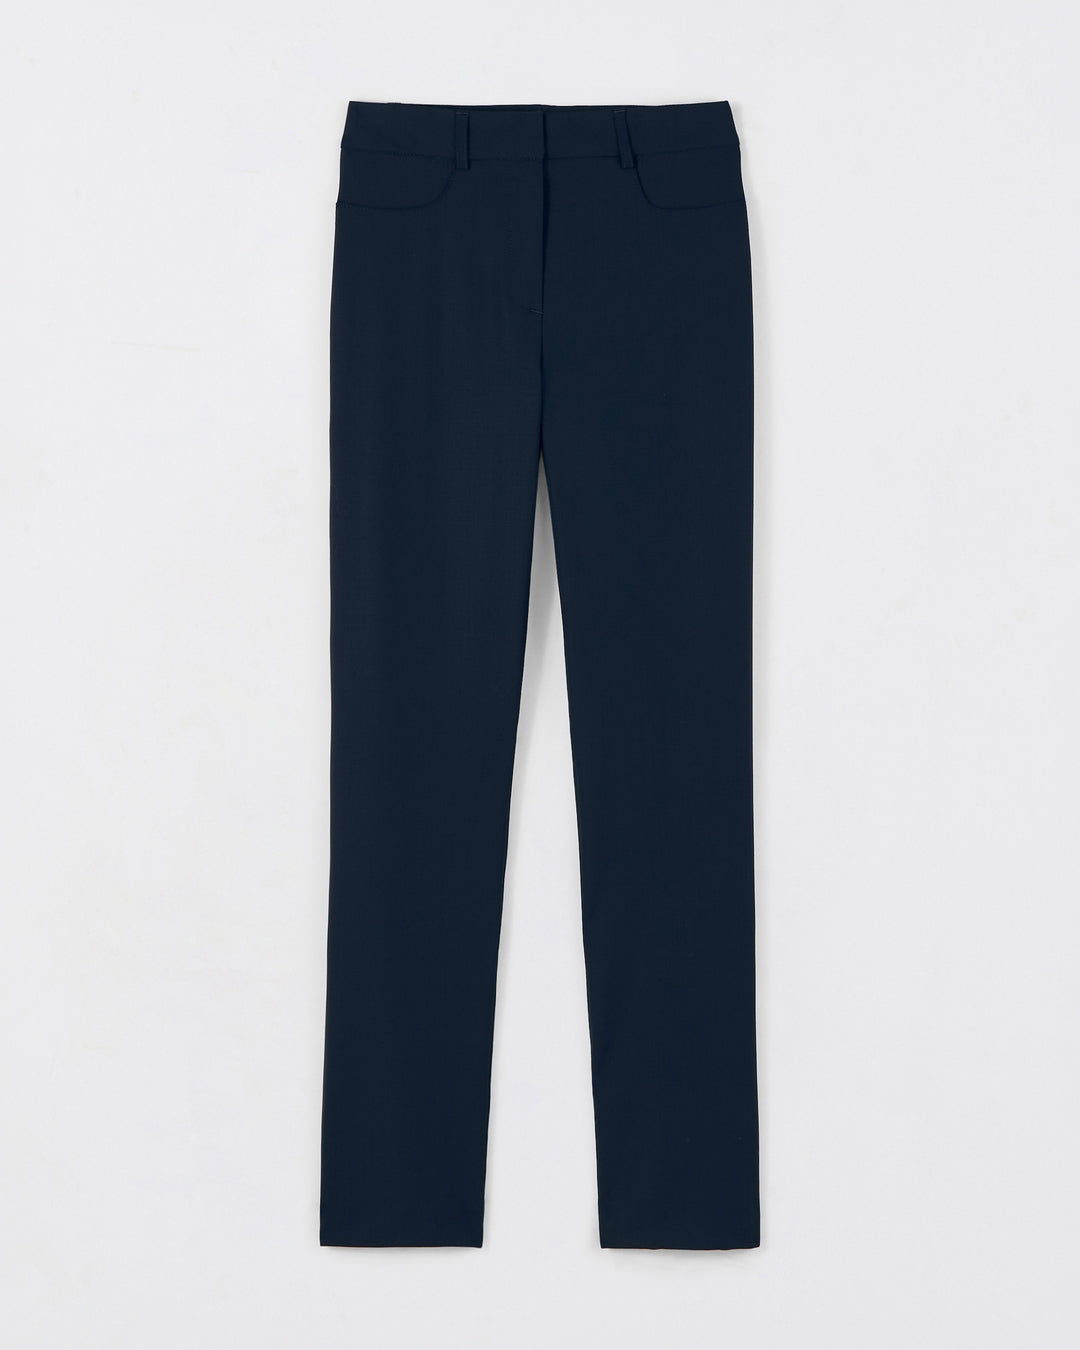 New York tailored pants - Midnight Blue super 120's